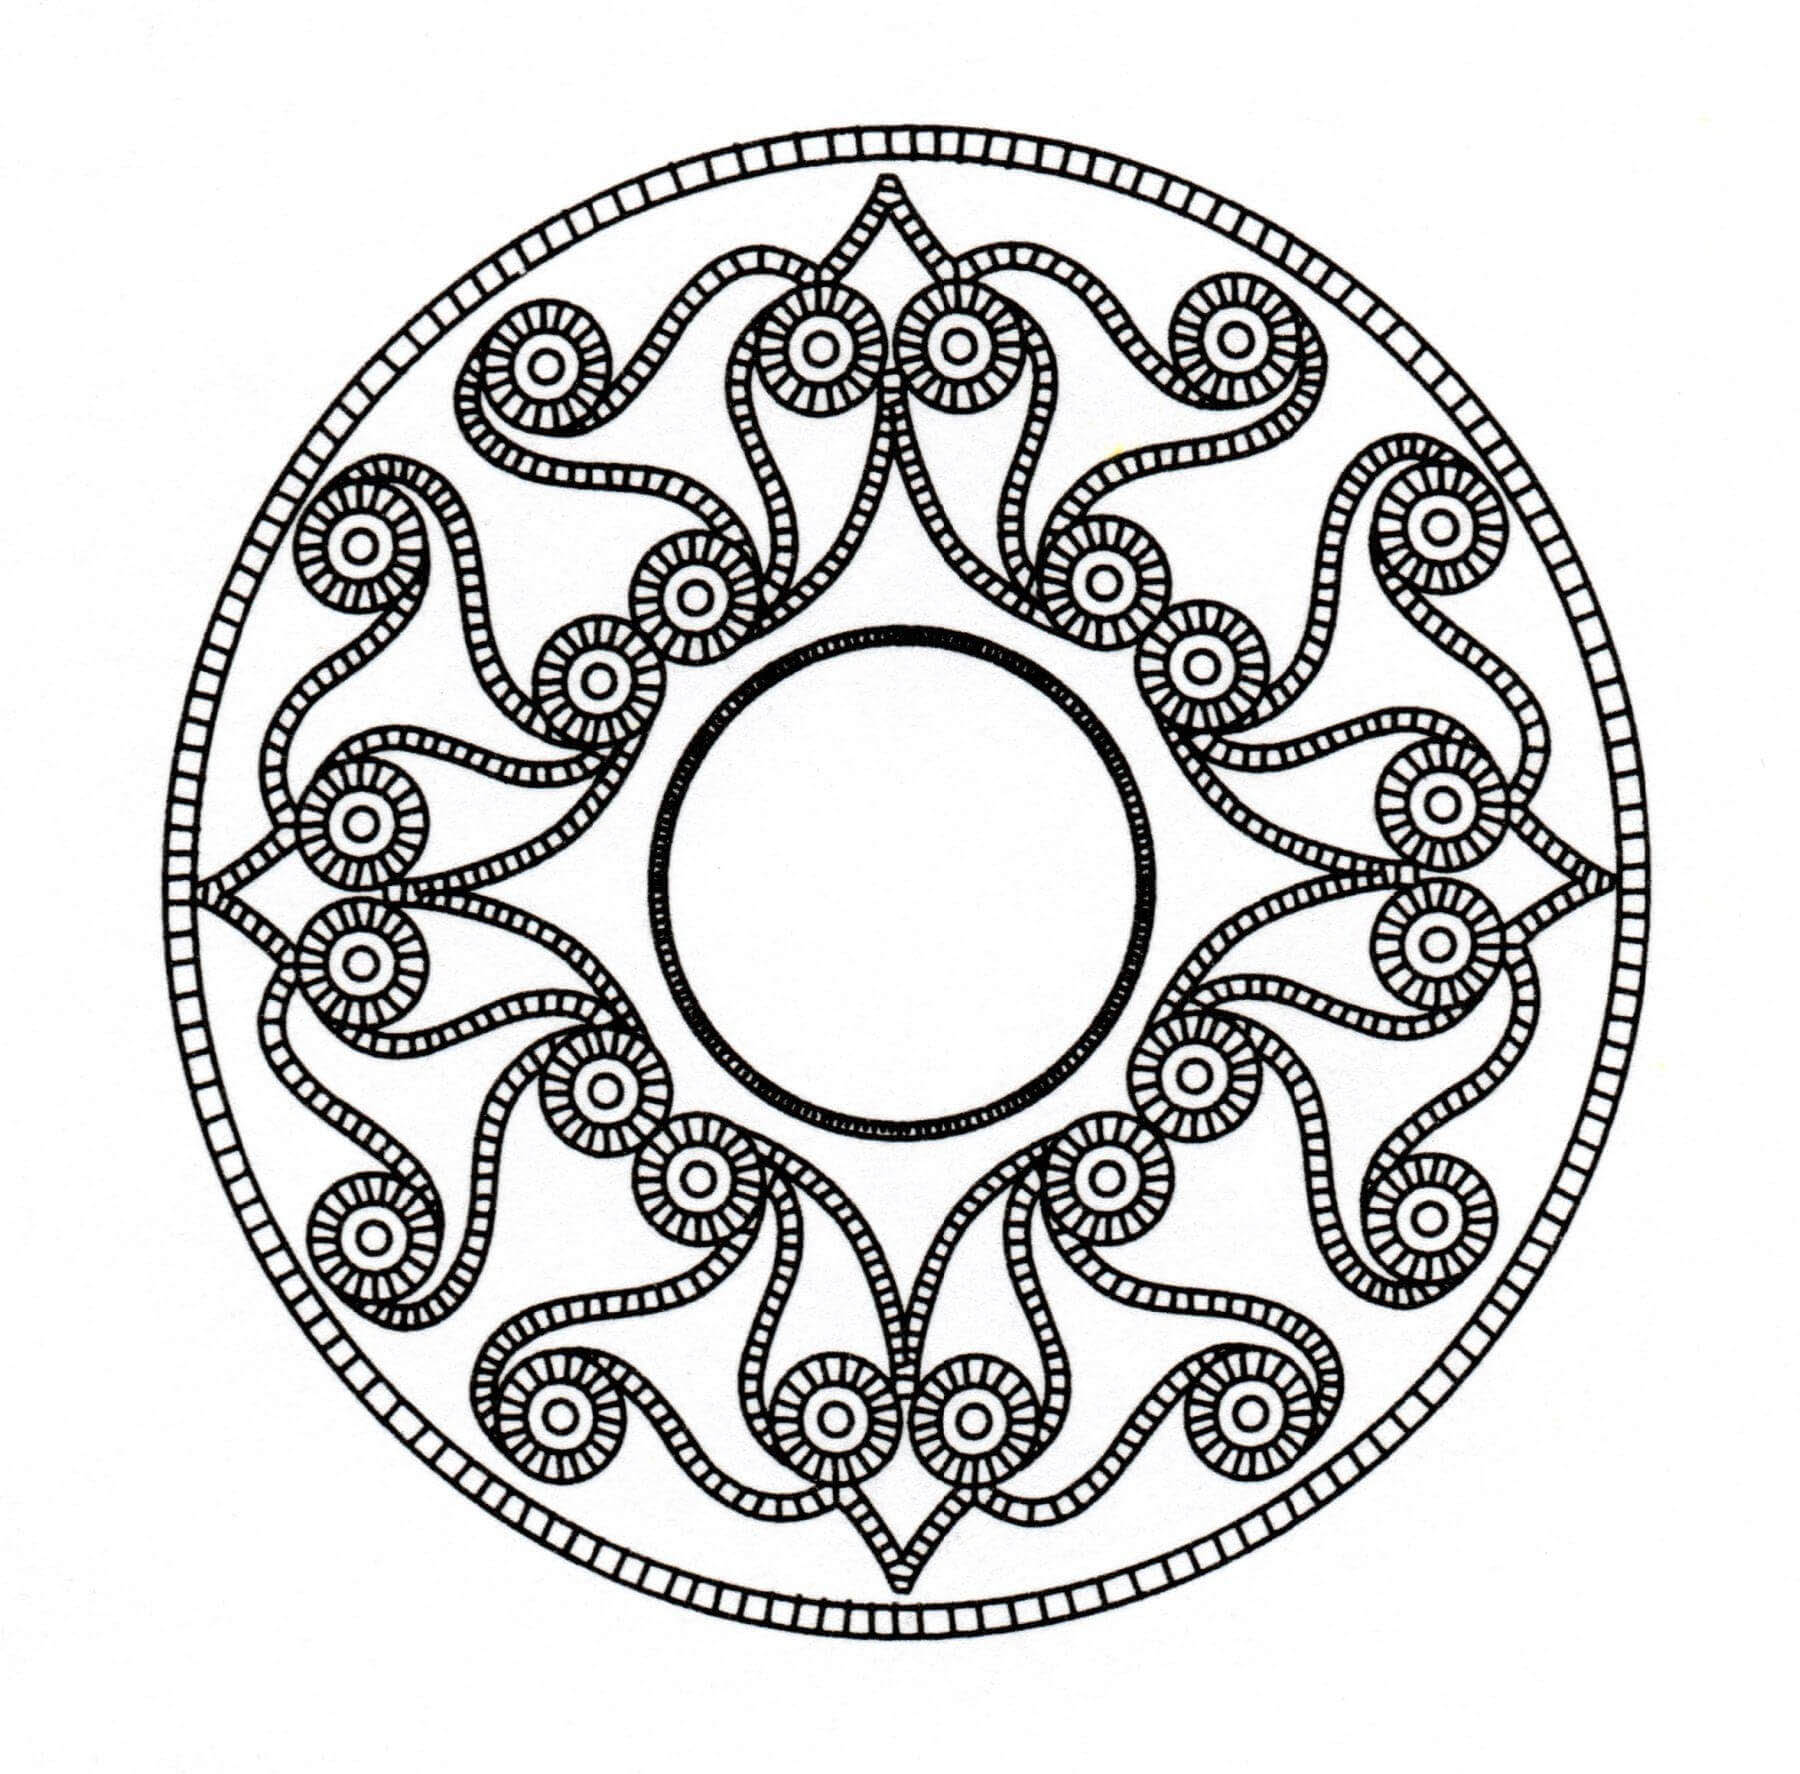 A simple Celtic-style mandala